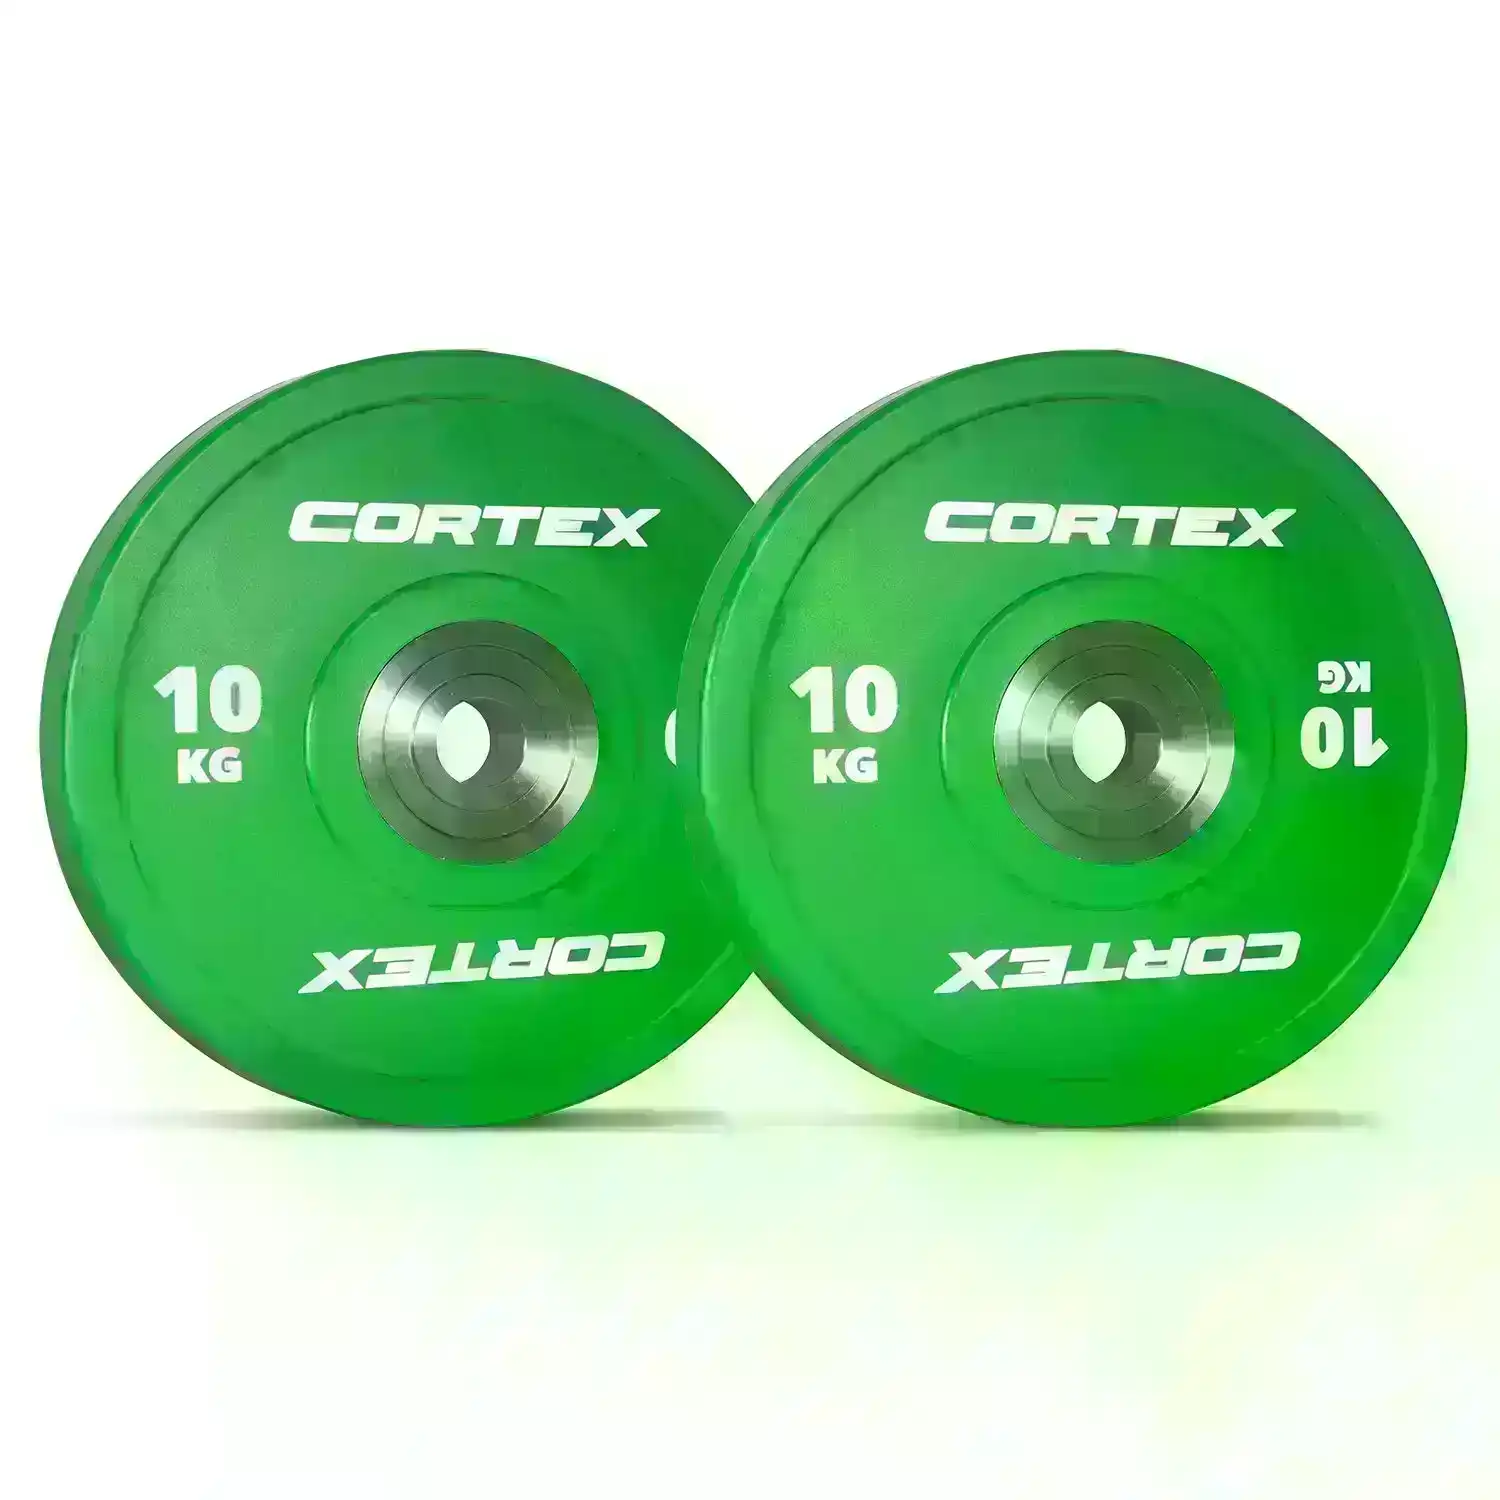 Cortex 10kg Competition Bumper Plates (Pair)